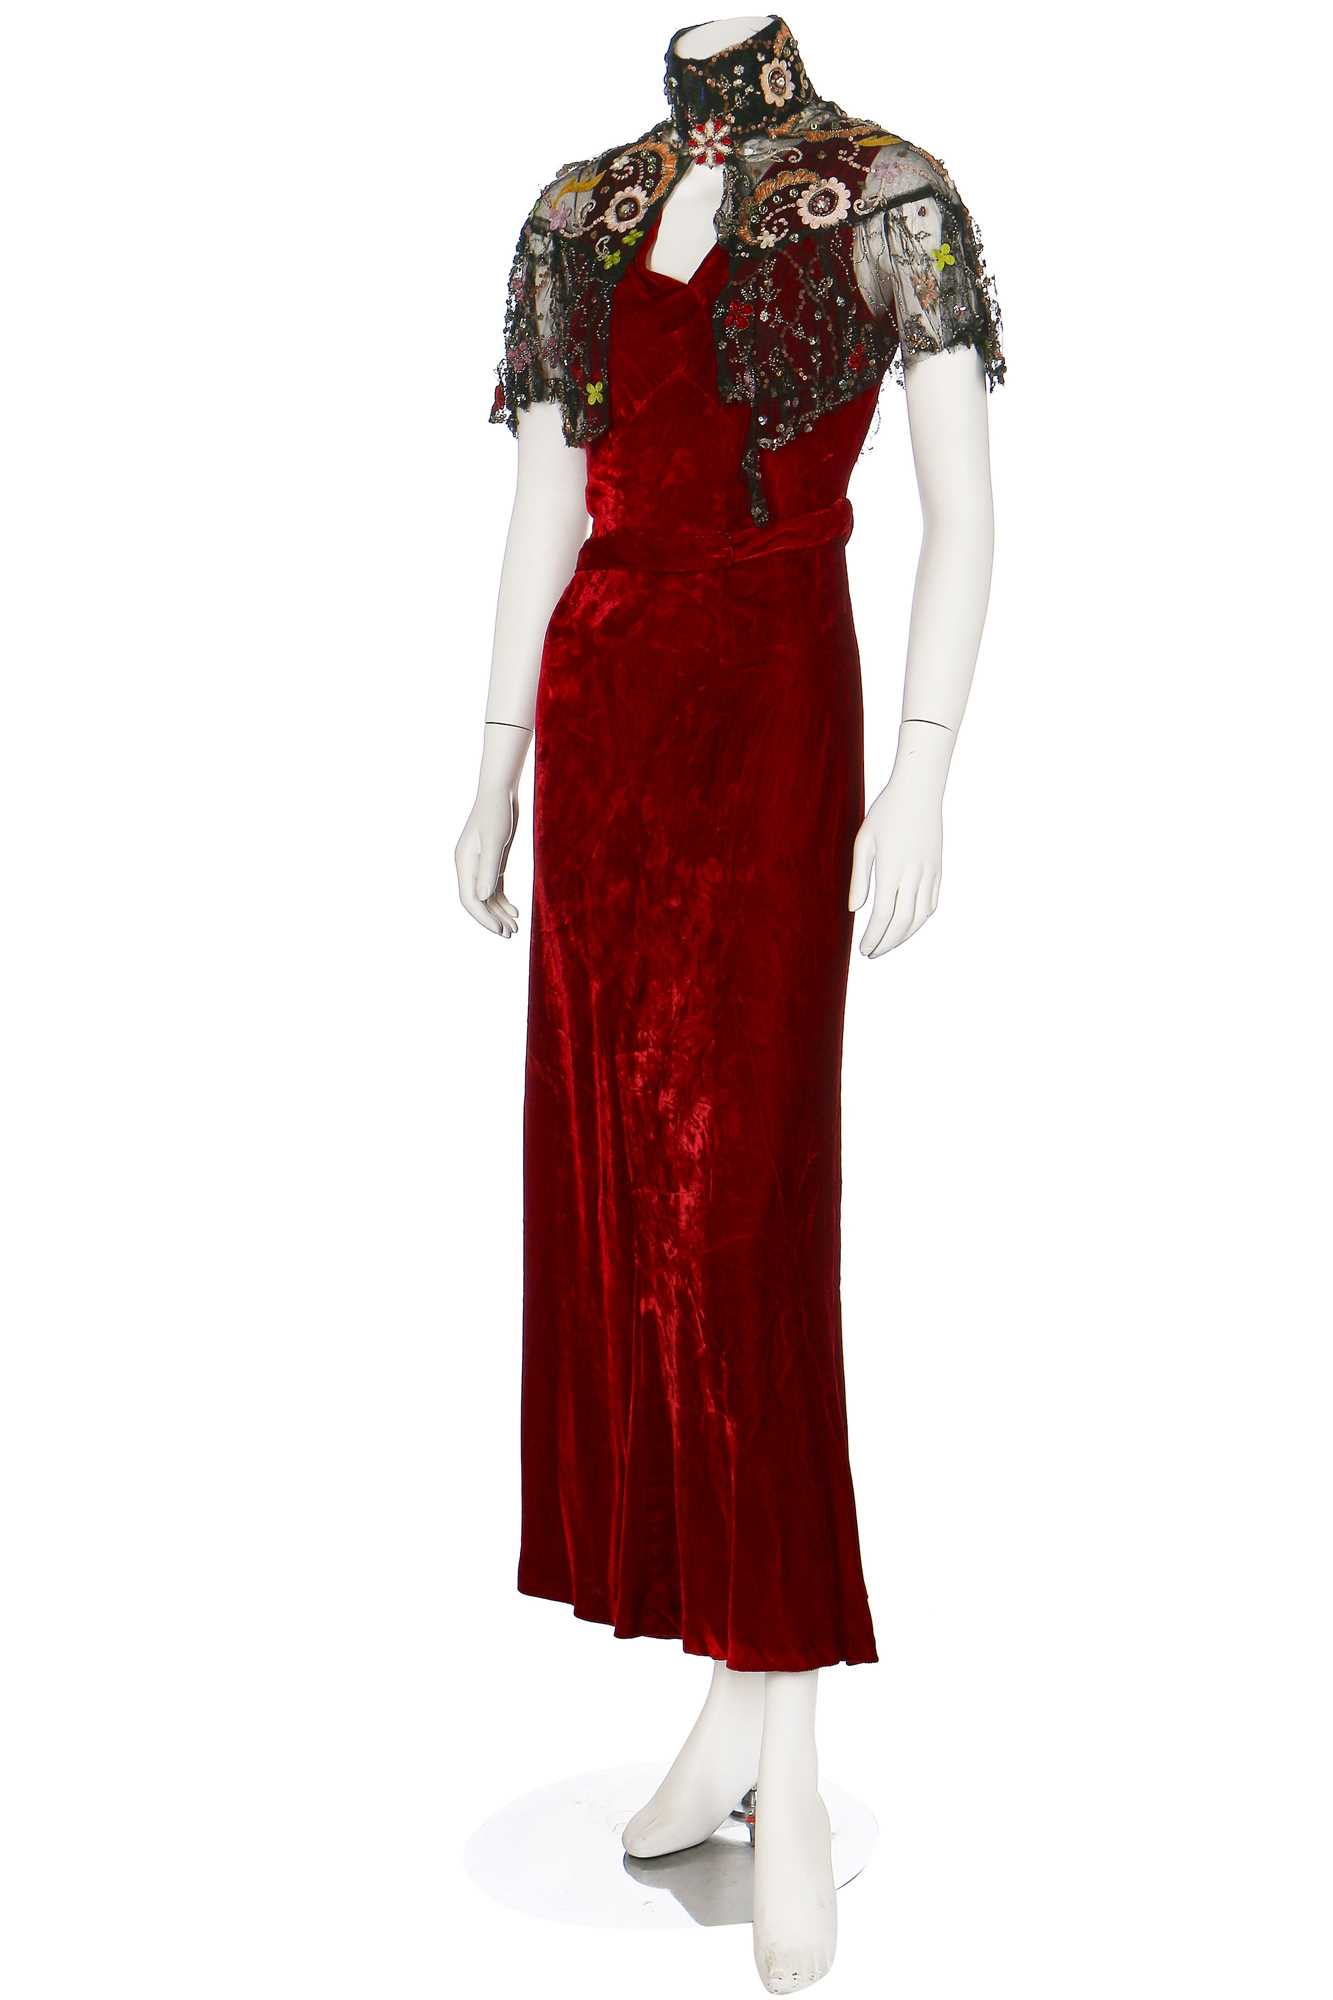 Lot 37 A Bias Cut Red Velvet Evening Gown 1930s